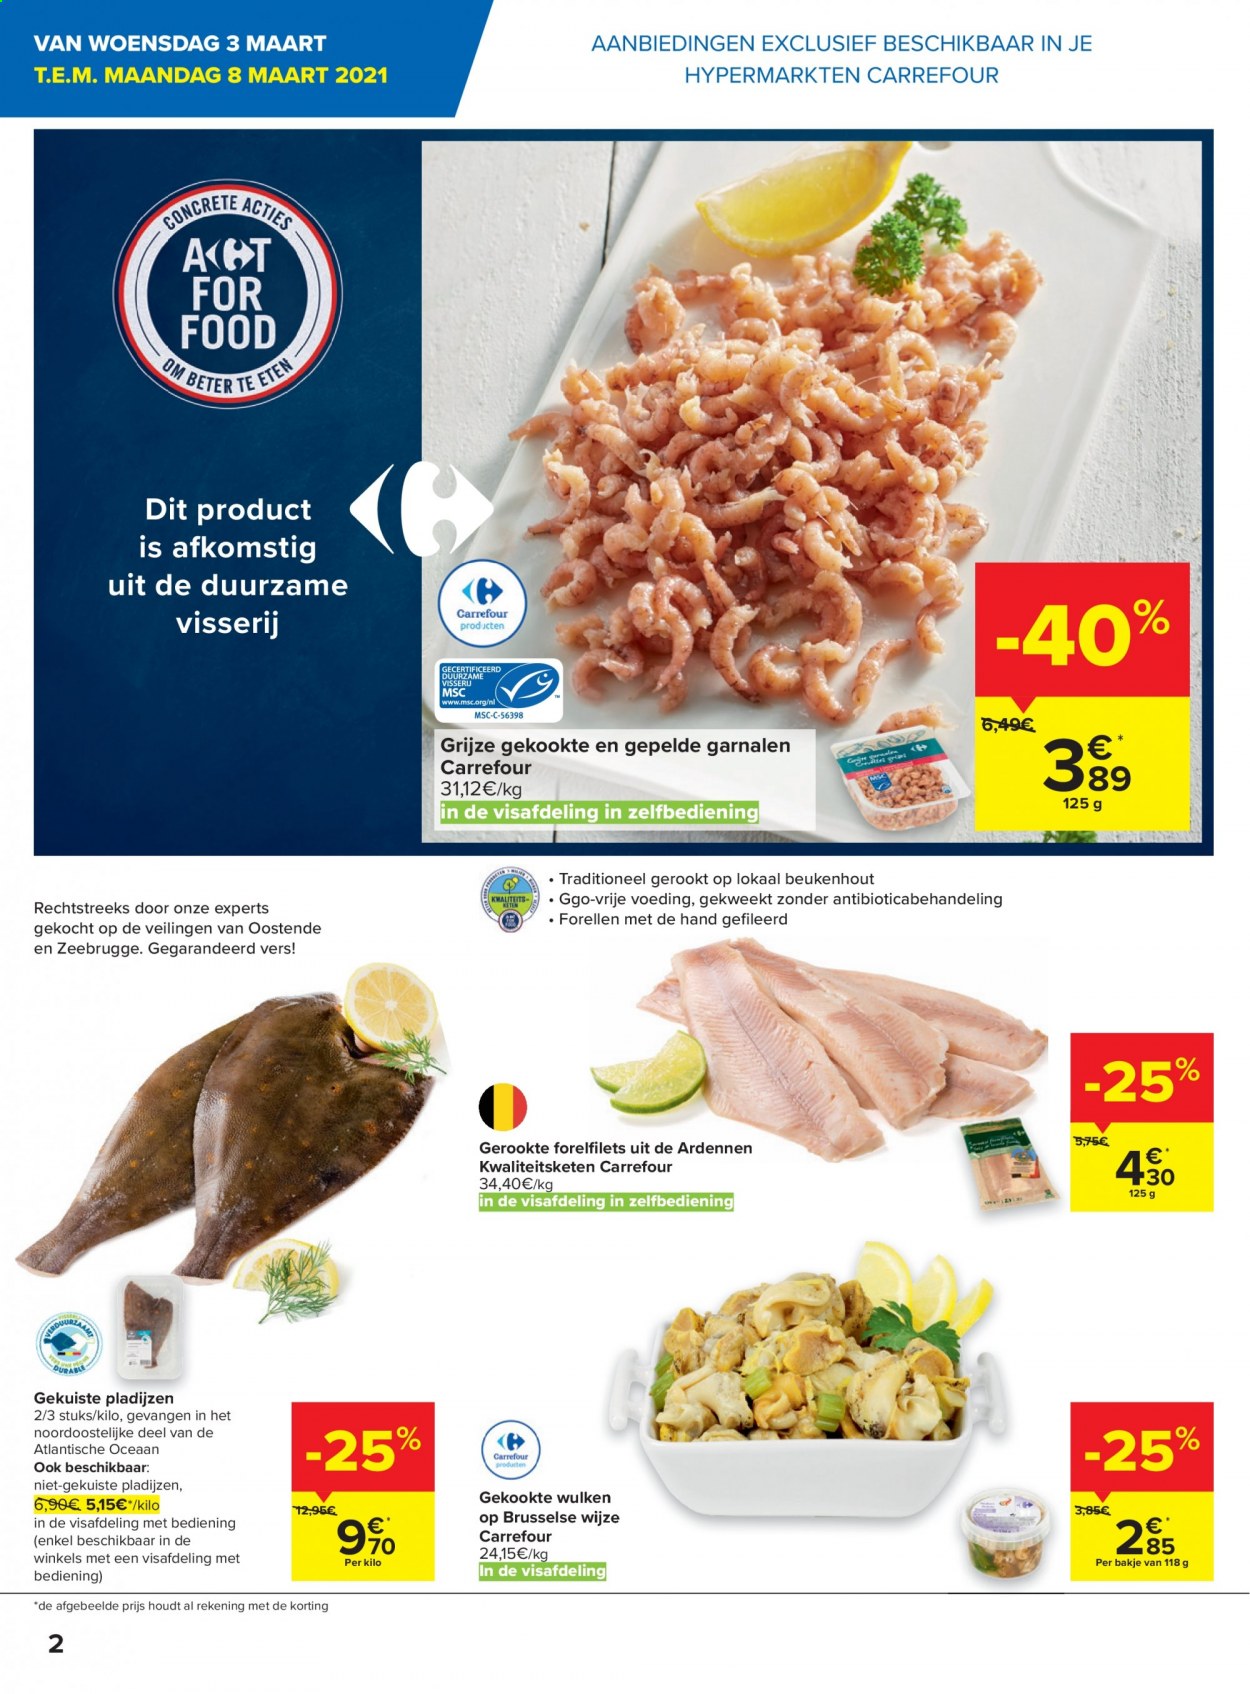 thumbnail - Carrefour hypermarkt-aanbieding - 03/03/2021 - 15/03/2021 -  producten in de aanbieding - garnalen. Pagina 2.